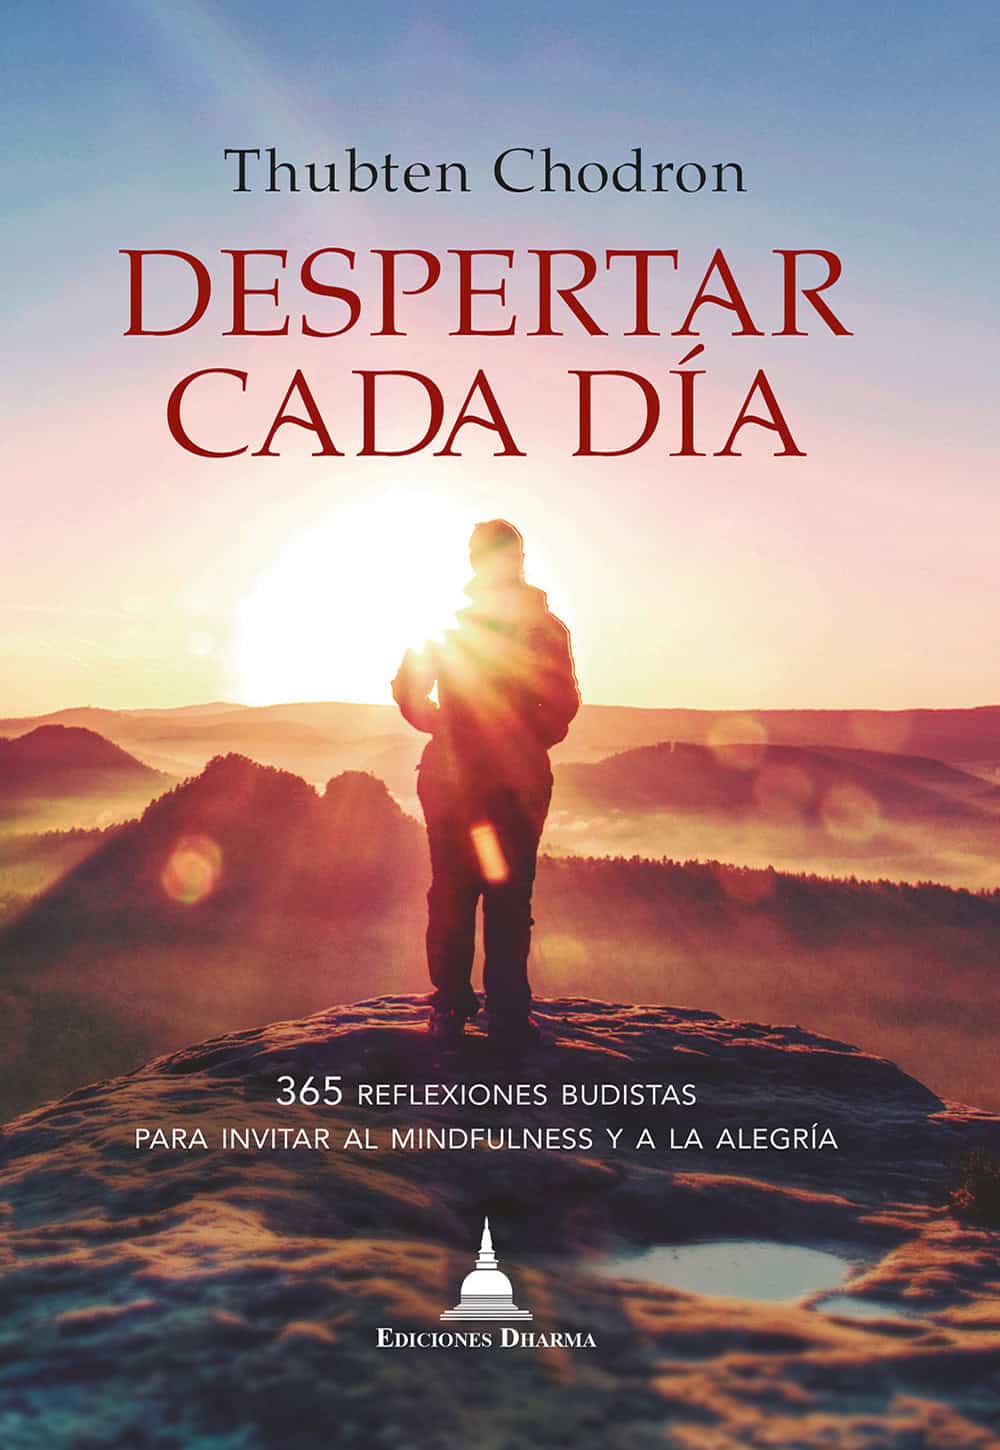 Cover of Spanish translation of Awaken Every Day